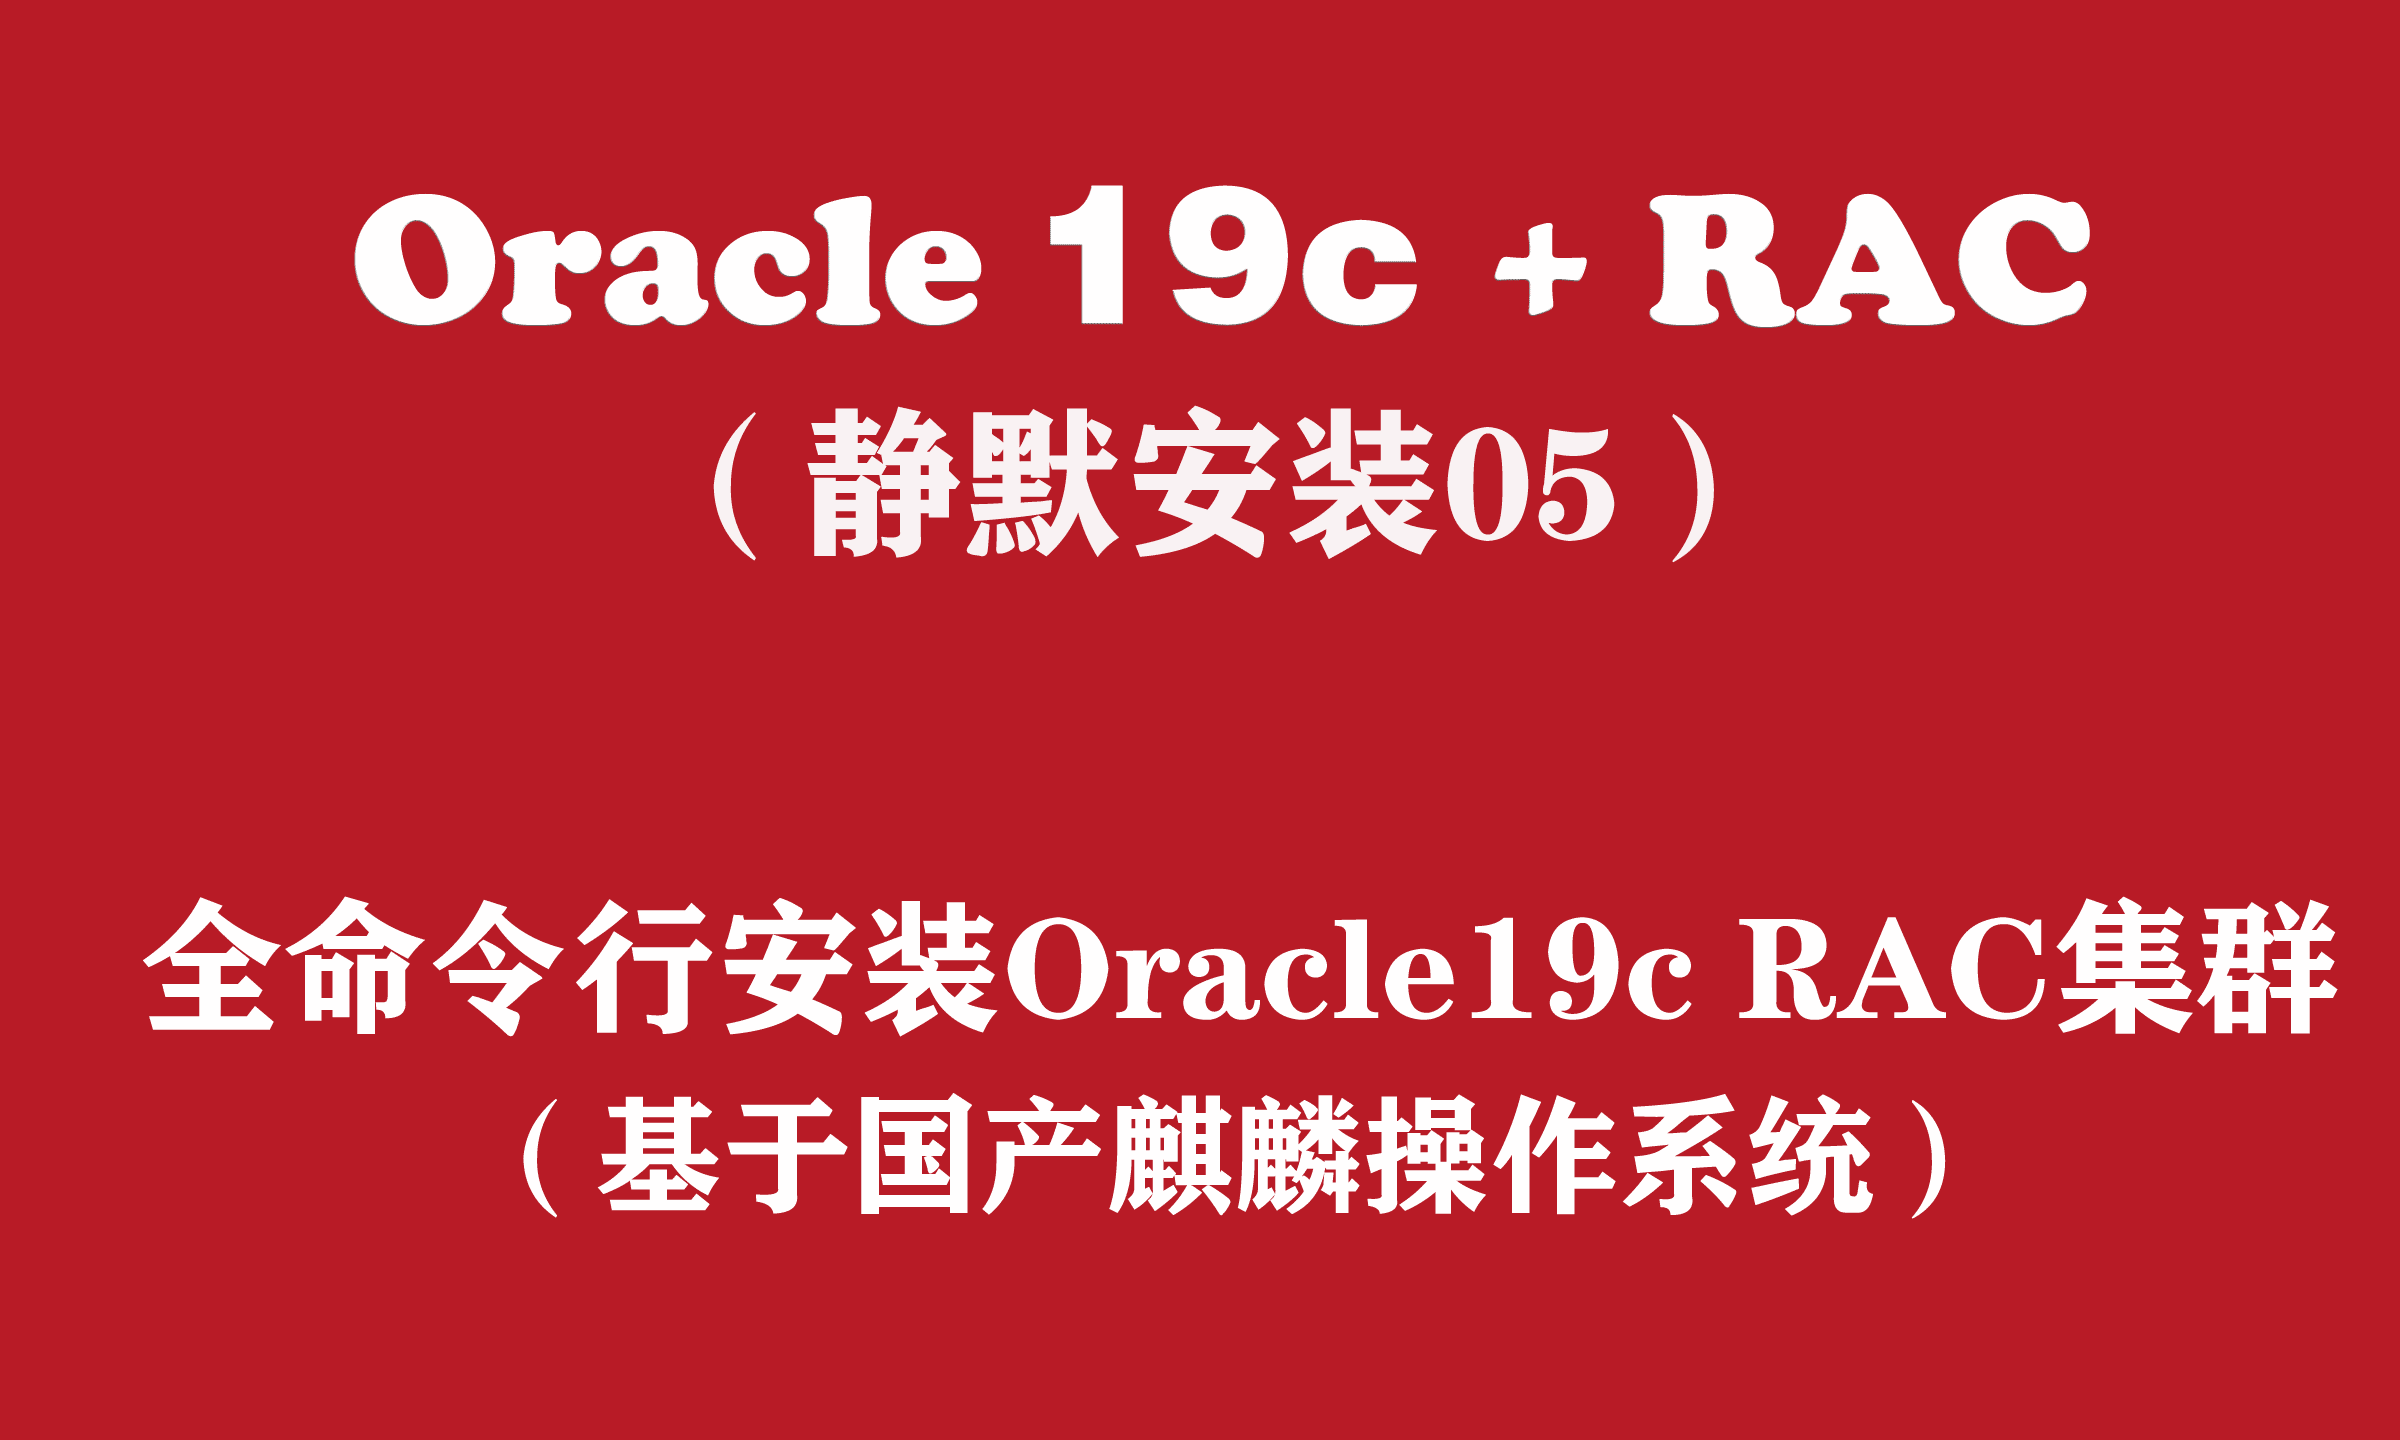  Oracle+RAC silent installation series (05): domestic Kirin installs Oracle19c RAC cluster 